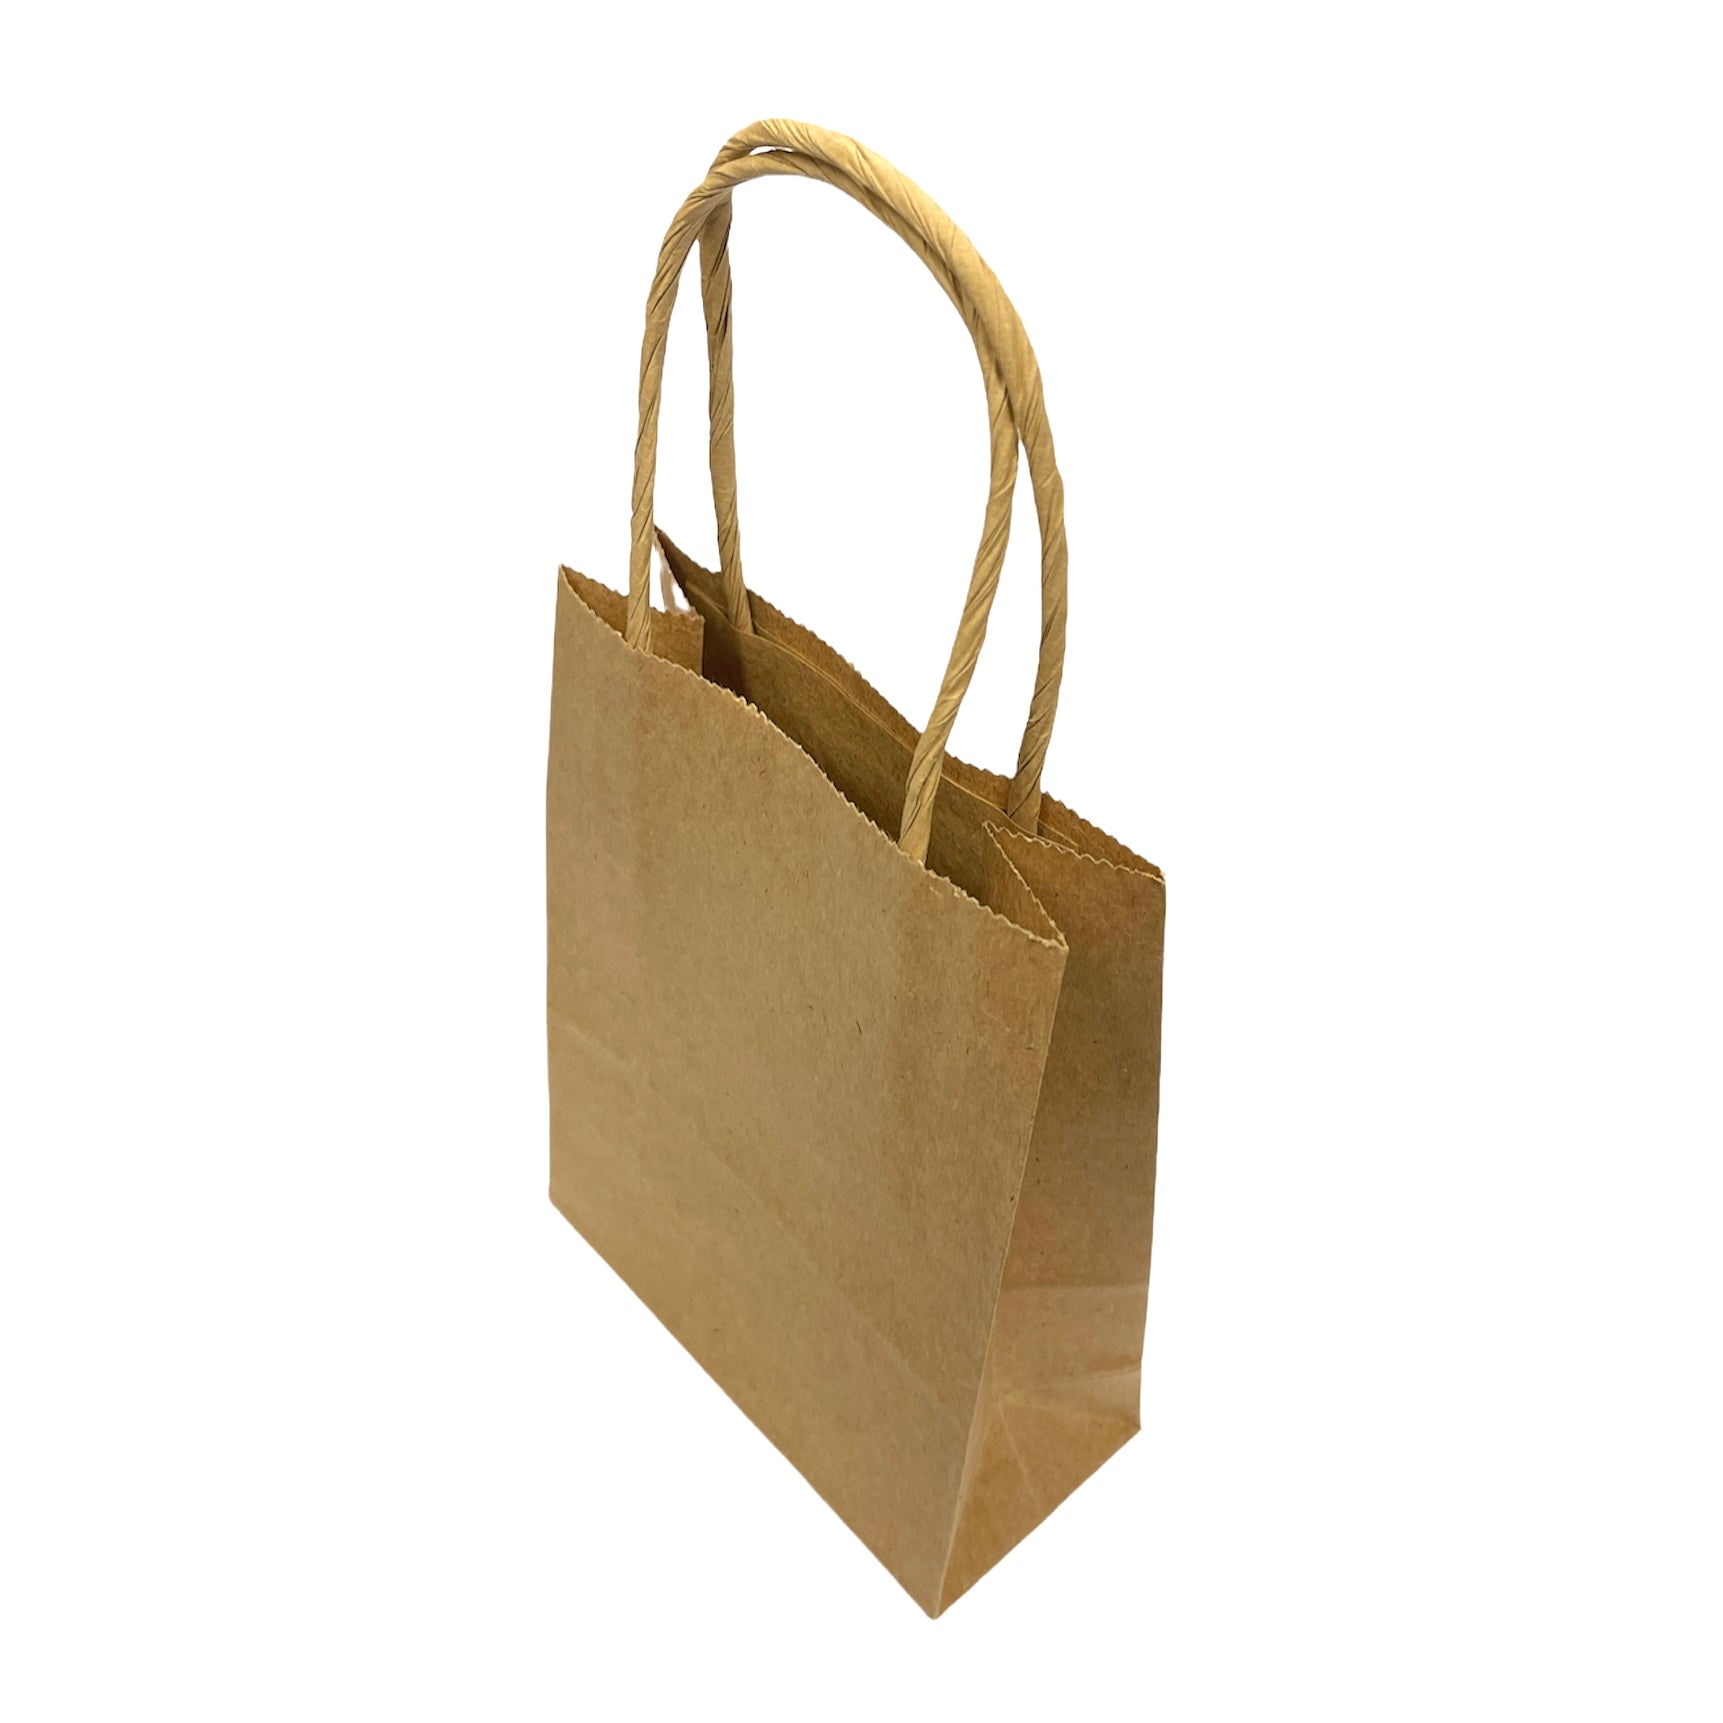 Folia - Papirpose med hank - 5 stk - Natur - Liten